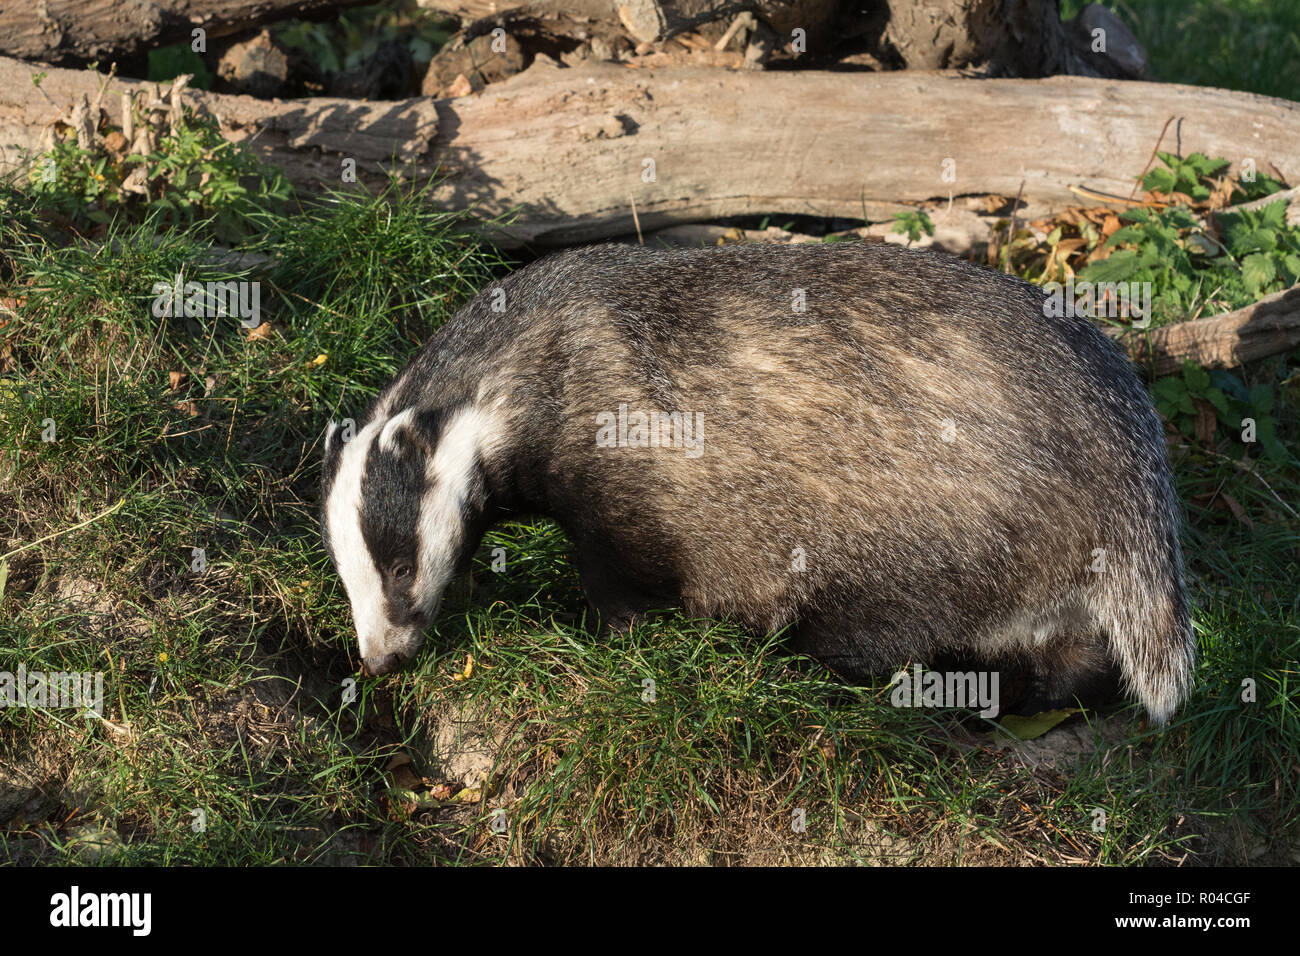 Badger (European or Eurasian badger, Meles meles), a mustelid species, in the UK Stock Photo